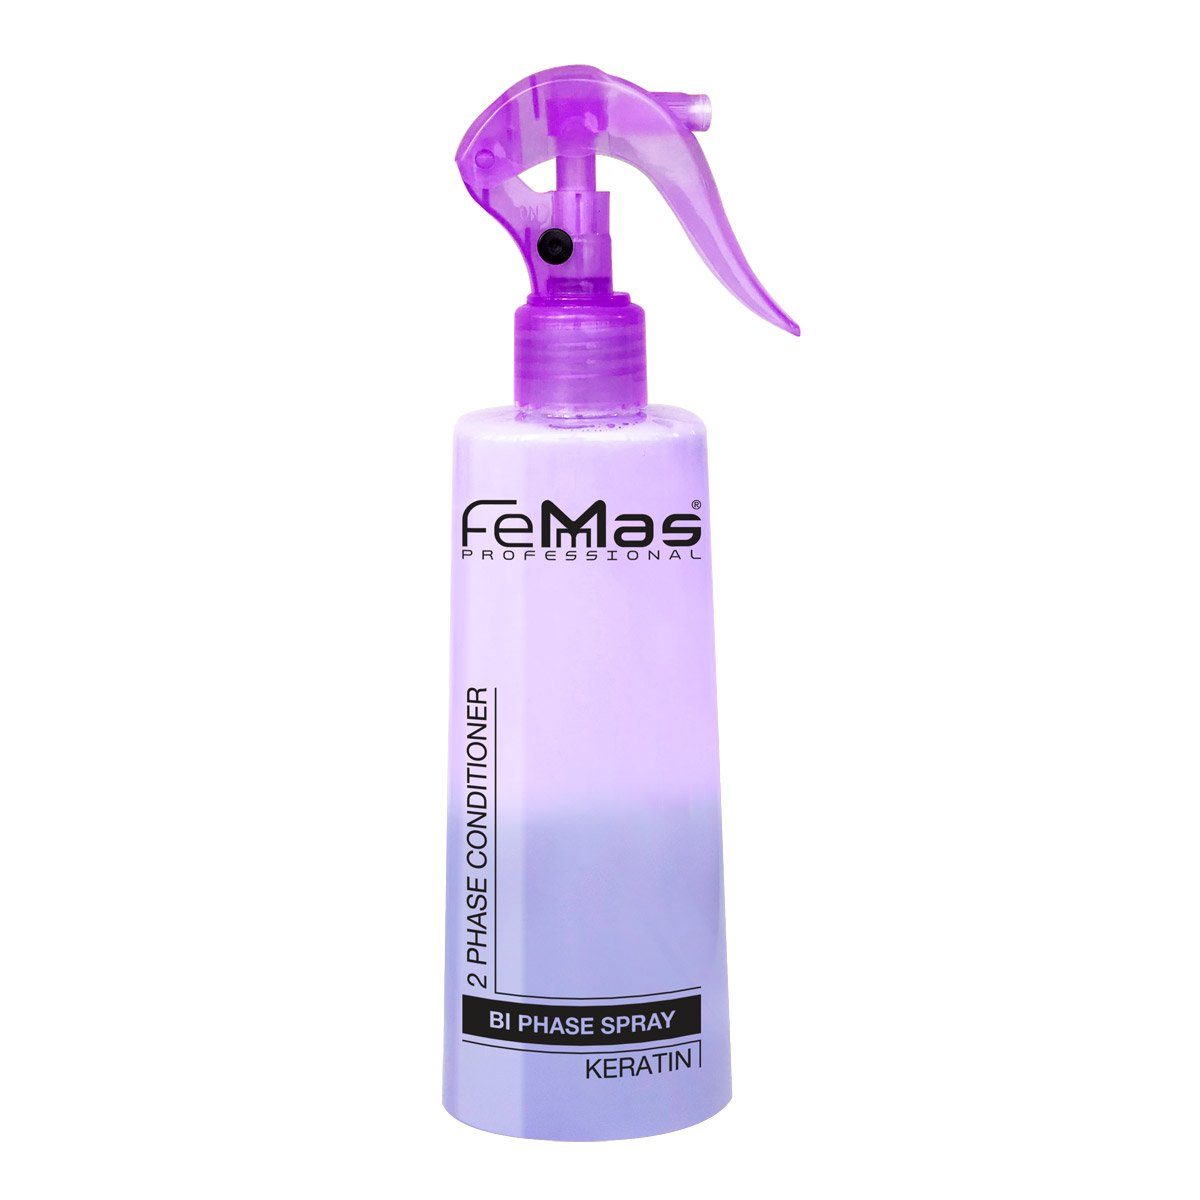 Femmas Premium Haarpflege-Spray FemMas Bi-Phase Spray Keratin 300ml